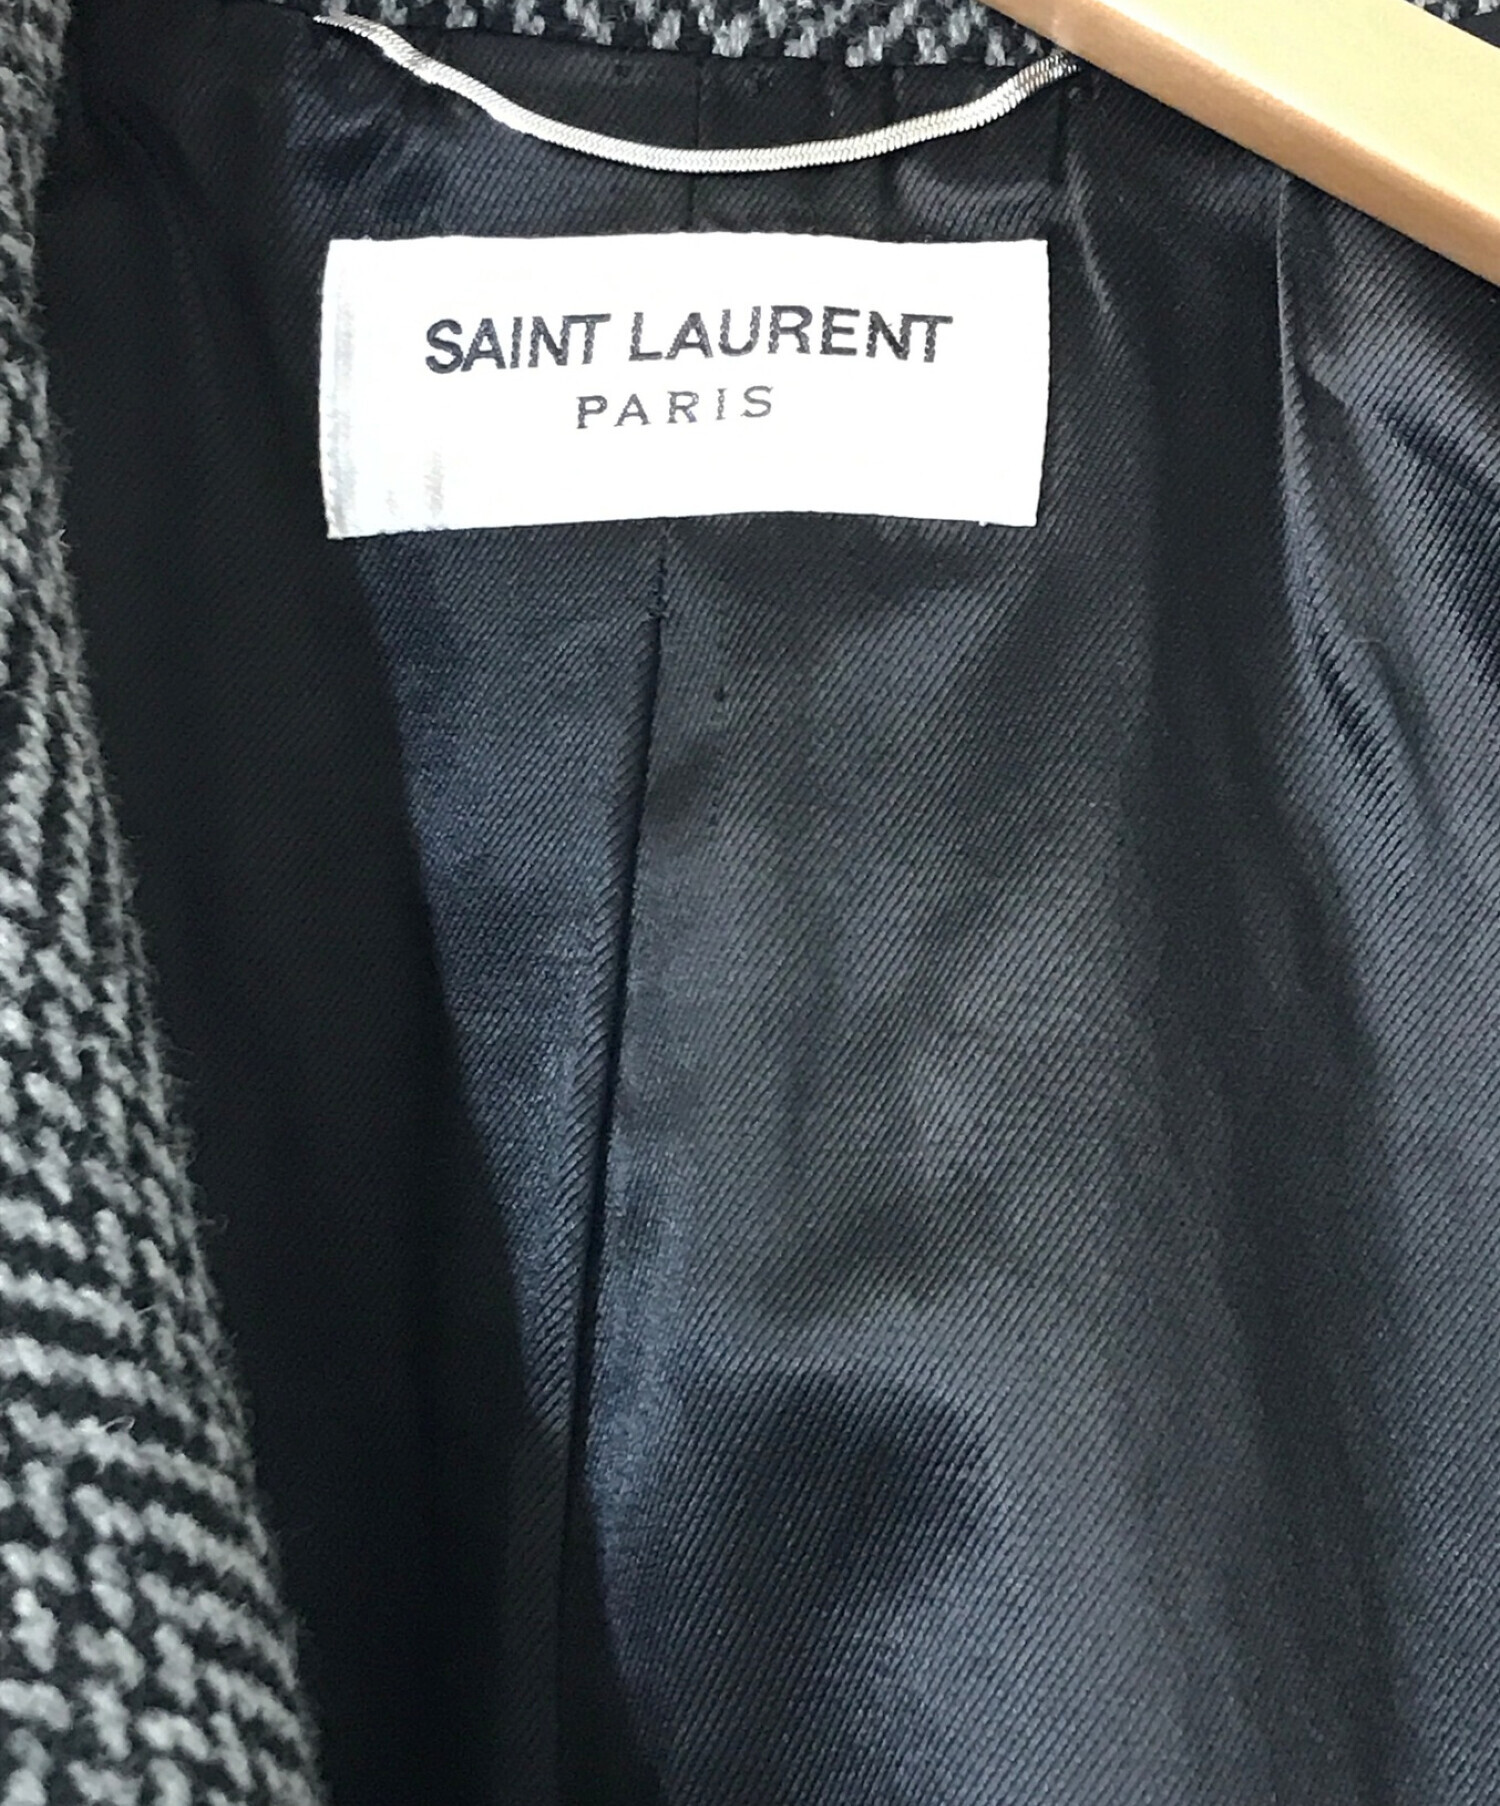 Saint Laurent Paris (サンローランパリ) ヘリンボーンコート グレー サイズ:46